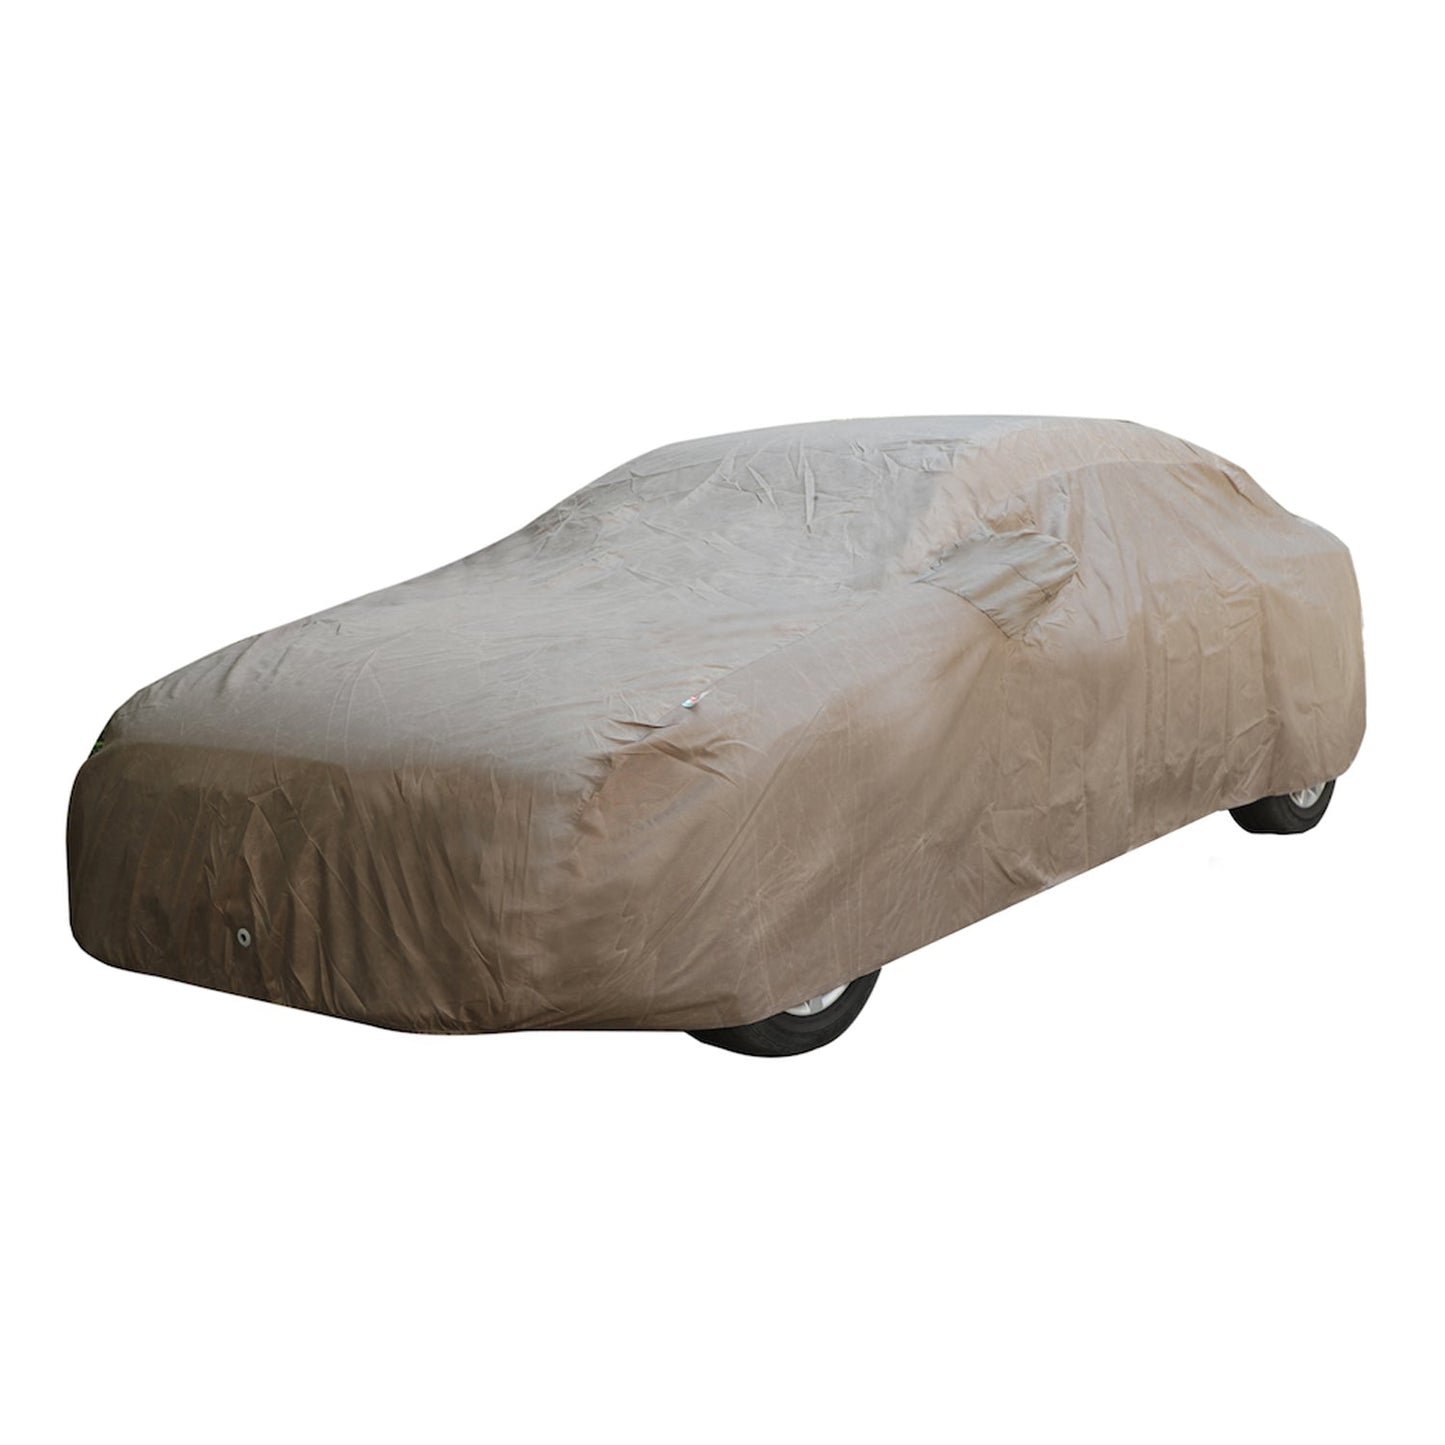 Oshotto Brown 100% Waterproof Car Body Cover with Mirror Pockets For Maruti Suzuki Alto K10